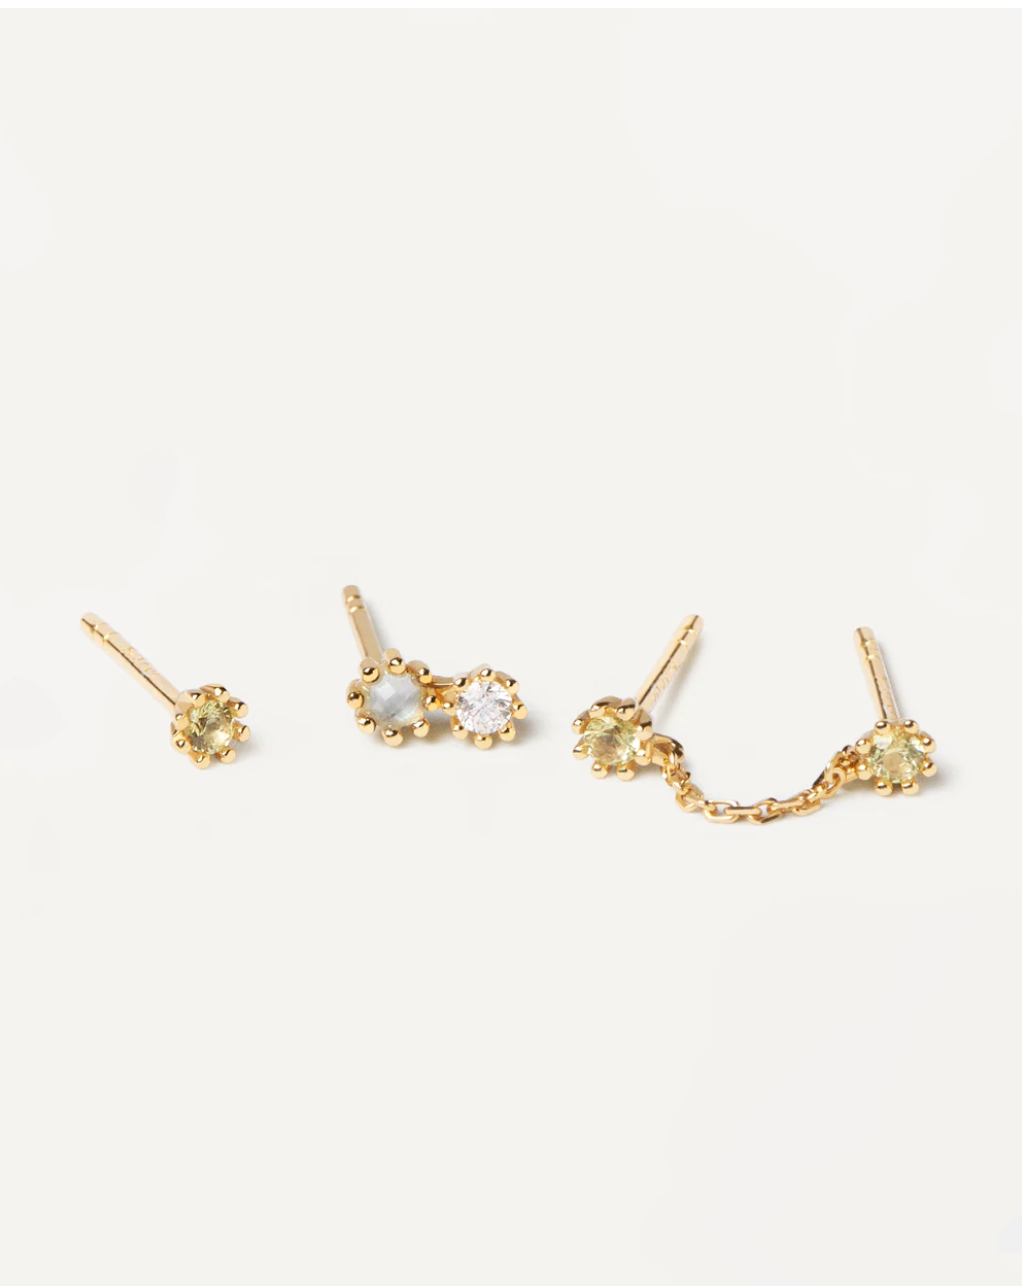 Kara Gold Earrings Set - 925 sterling silver / 18K gold plating